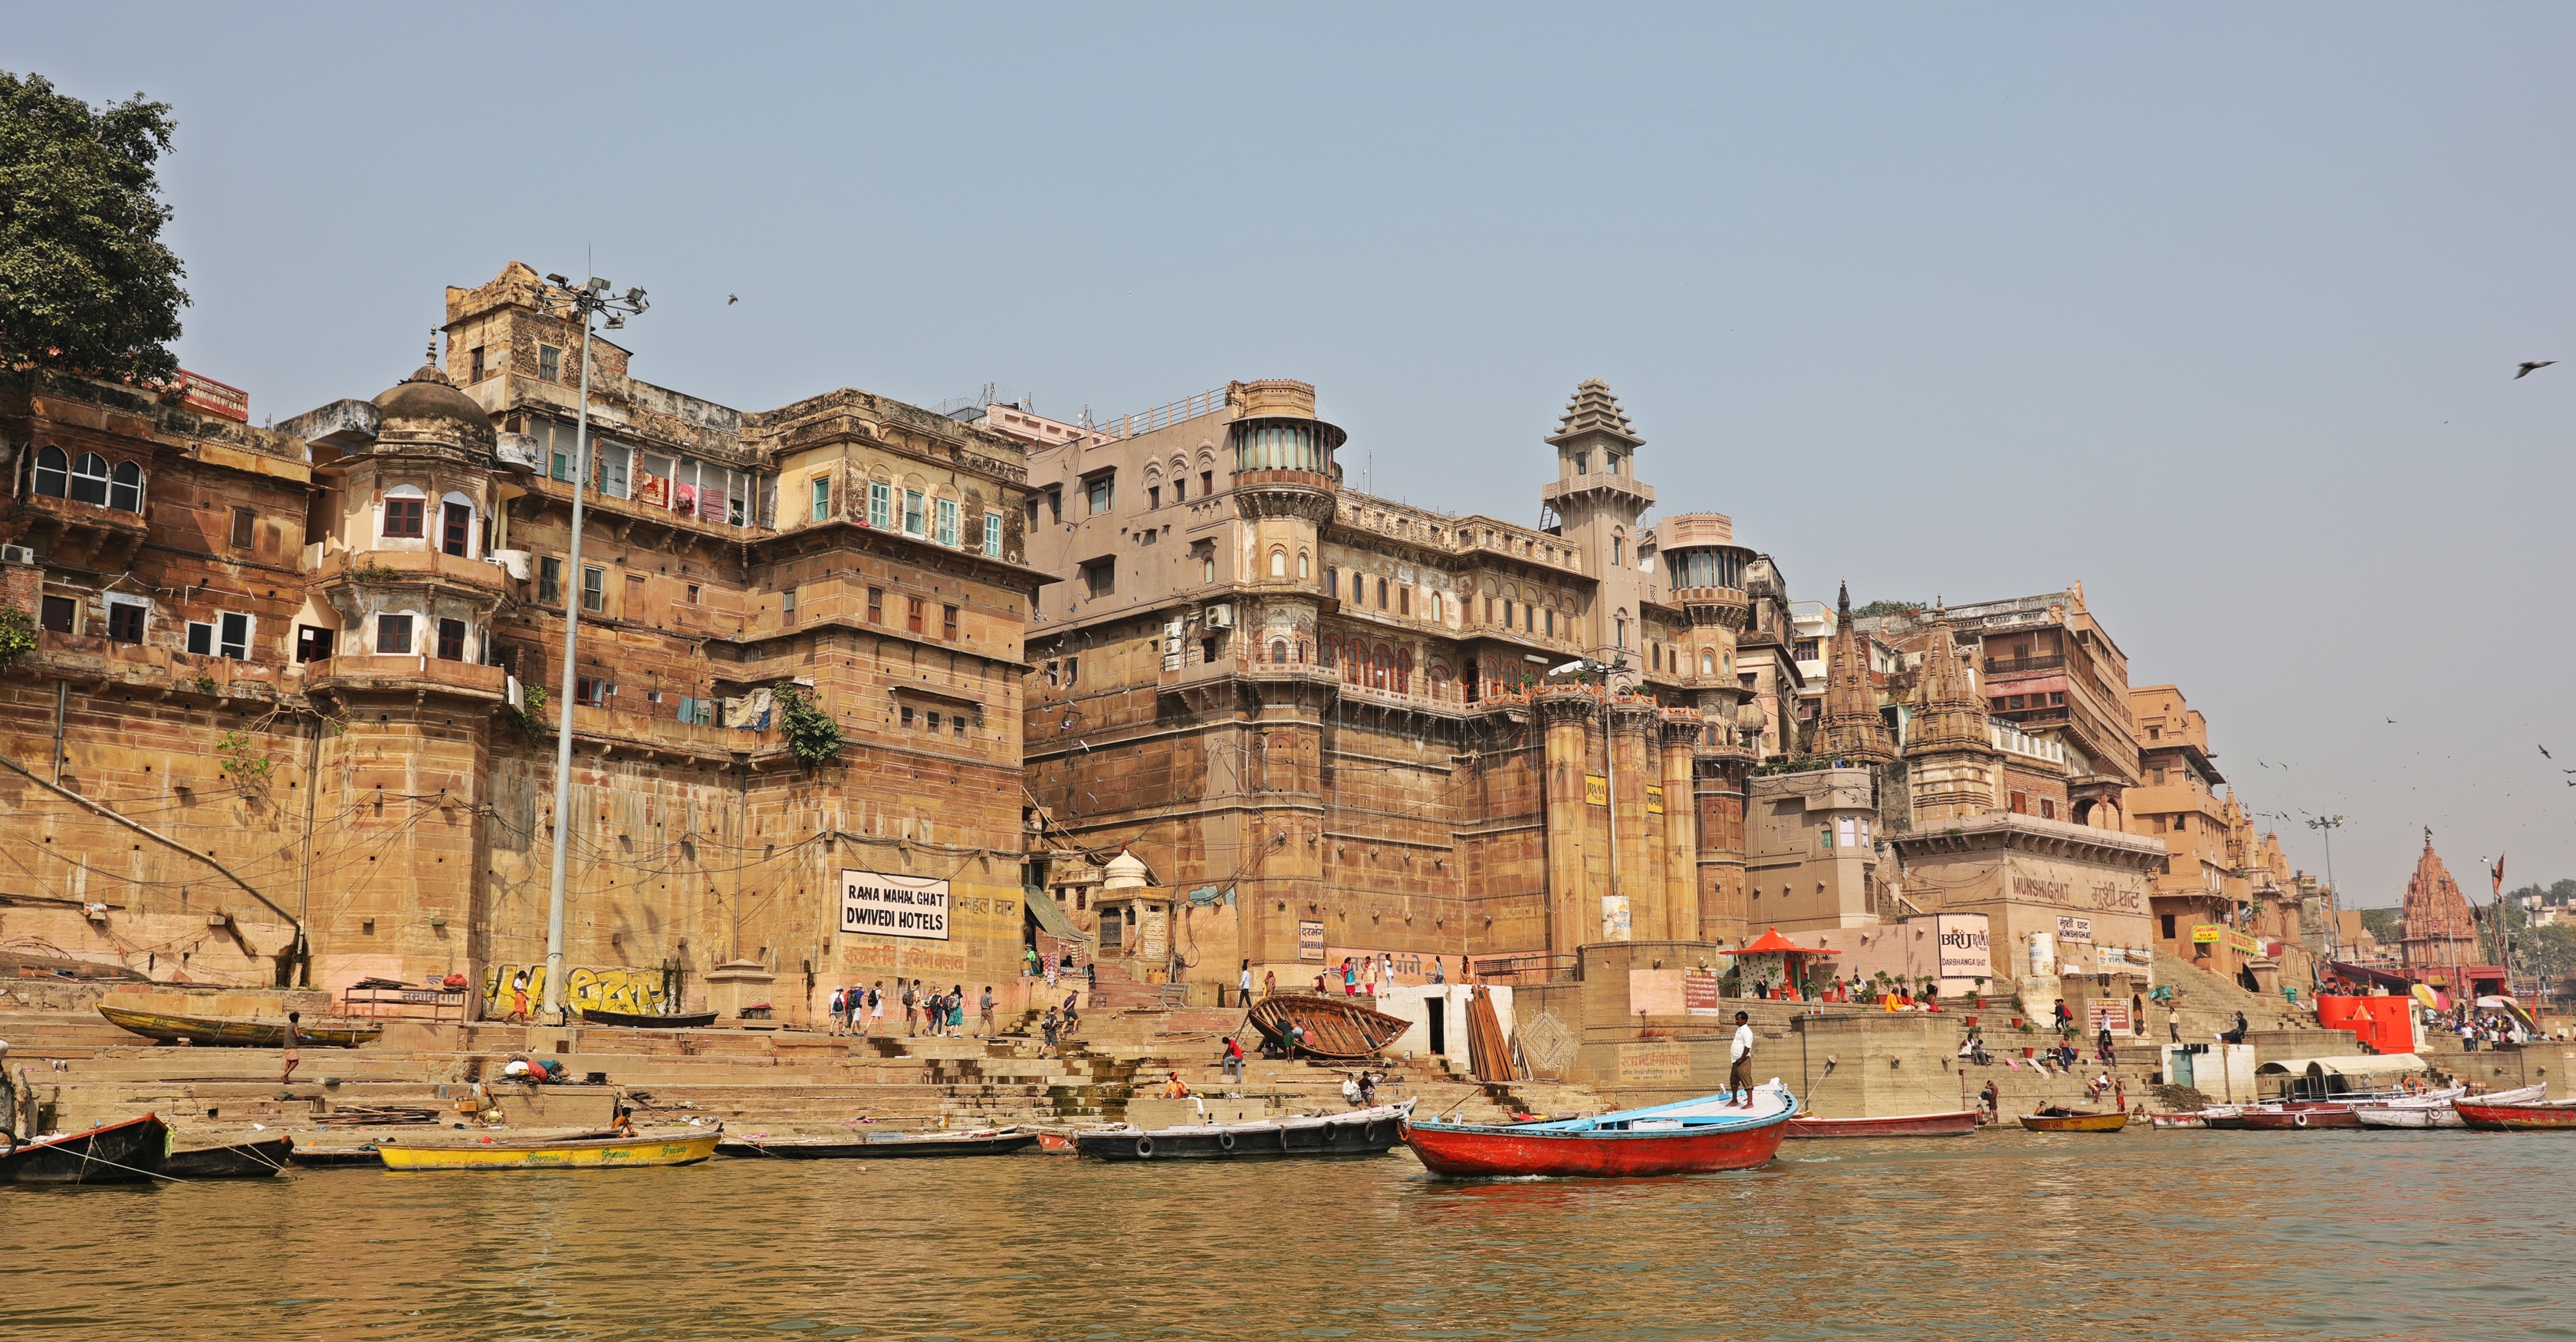 Historical buildings along the Ganges, Varanasi